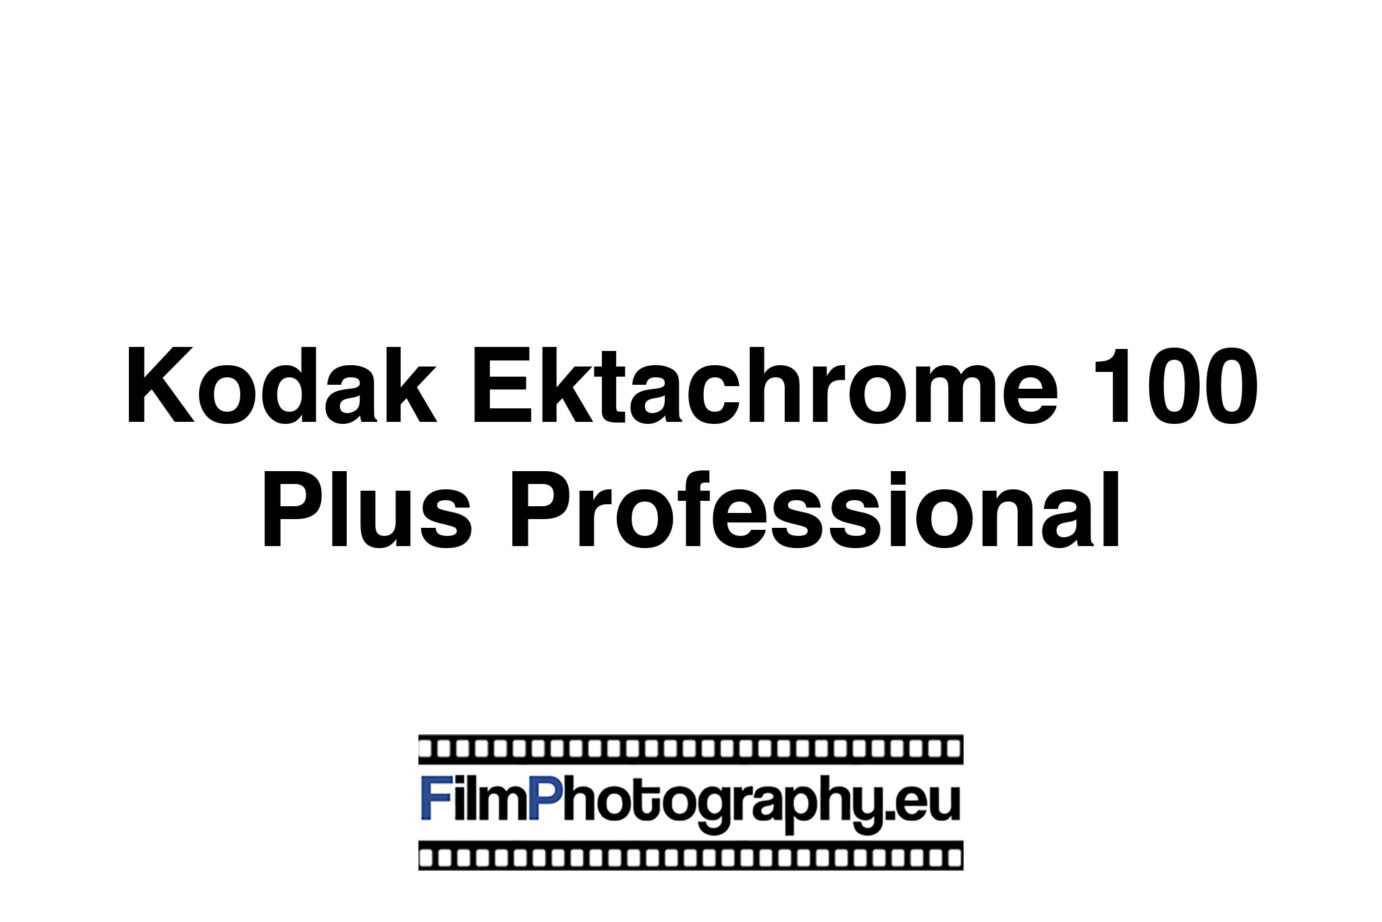 Kodak Ektachrome 100 Plus Professional | Guide for the film